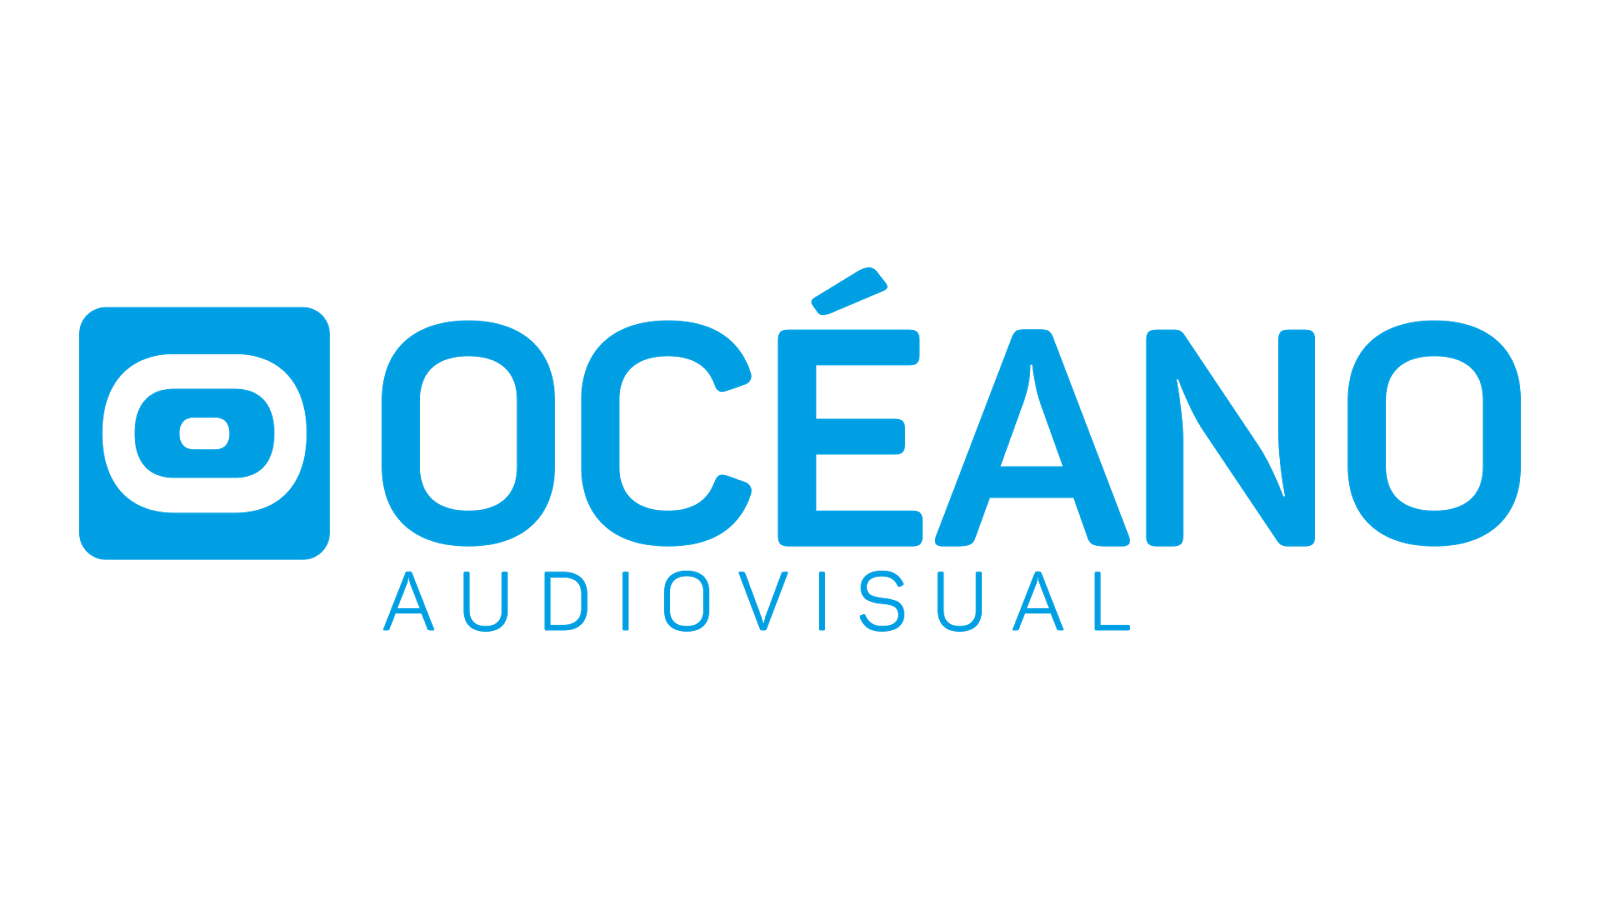 OCEANO AUDIOVISUAL